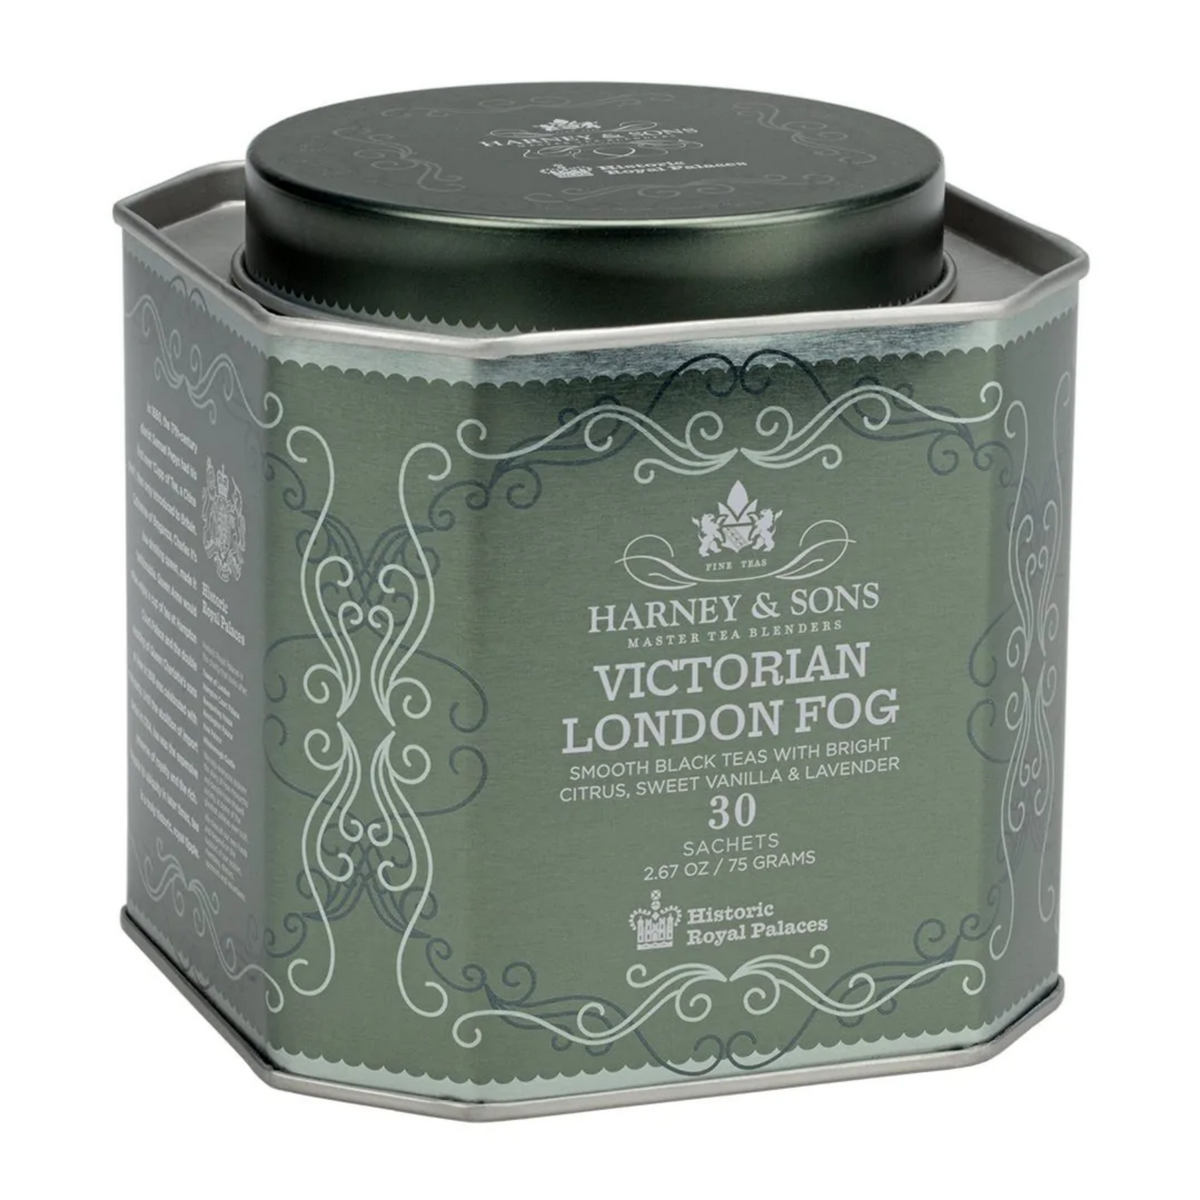 Harney & Sons タワー オブ ロンドン ブレンド 30サシェ入缶 - 茶